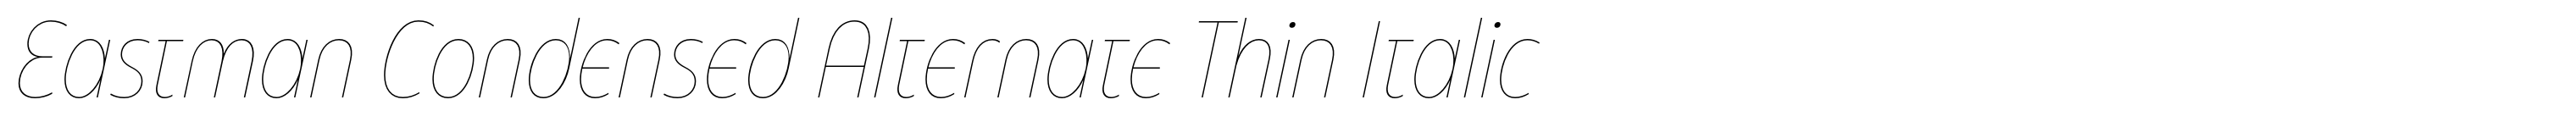 Eastman Condensed Alternate Thin Italic